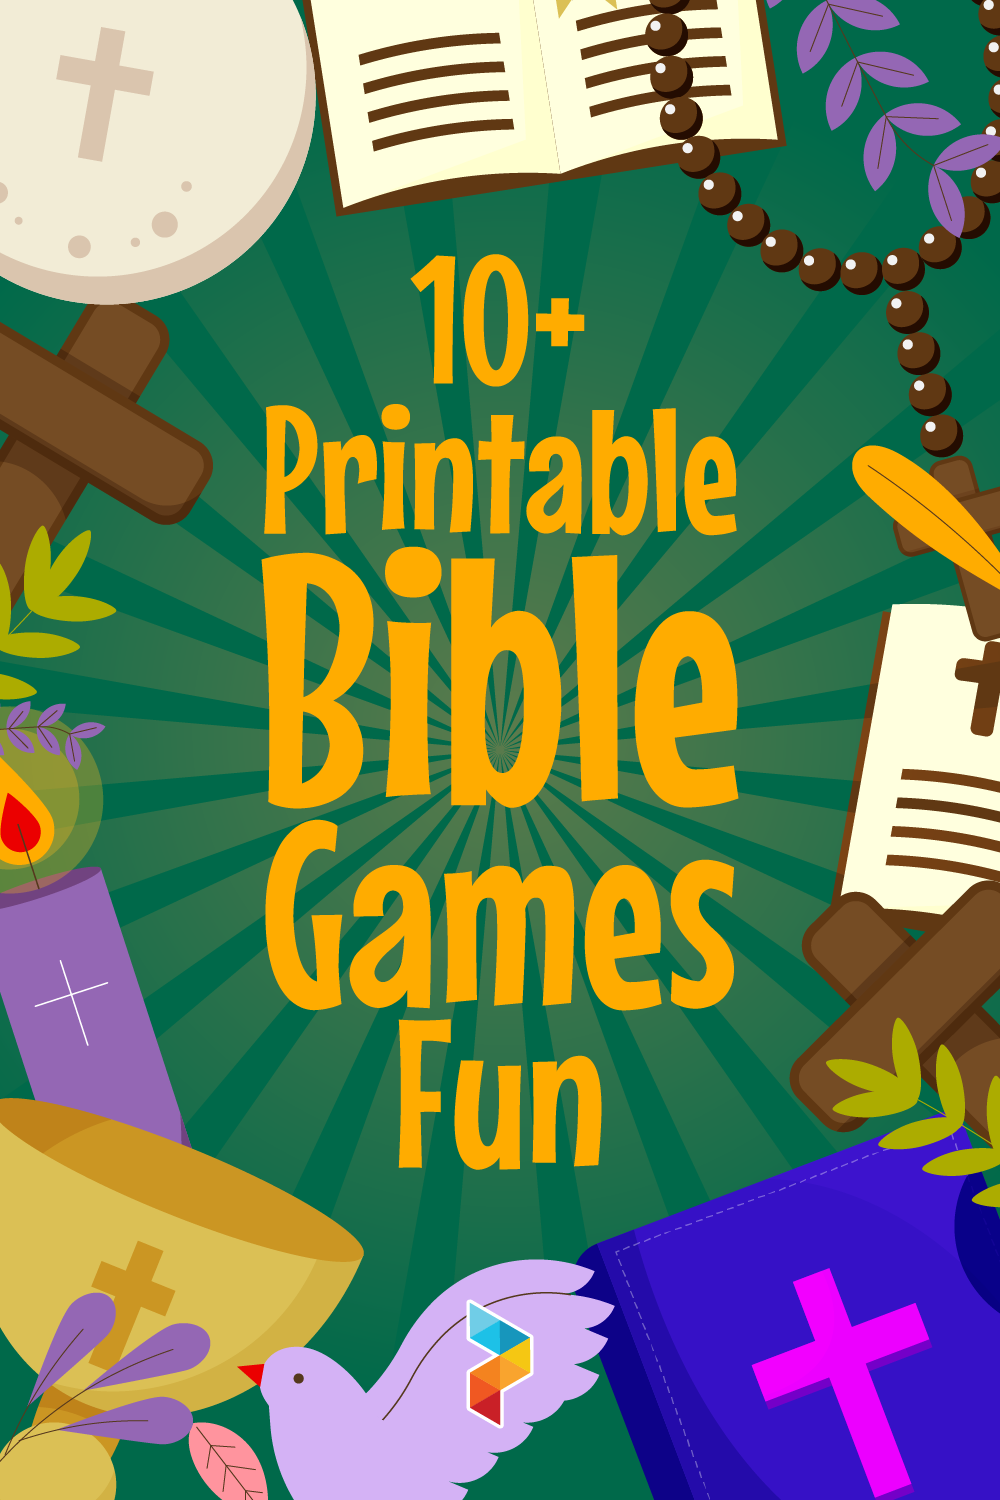 Bible Games Fun